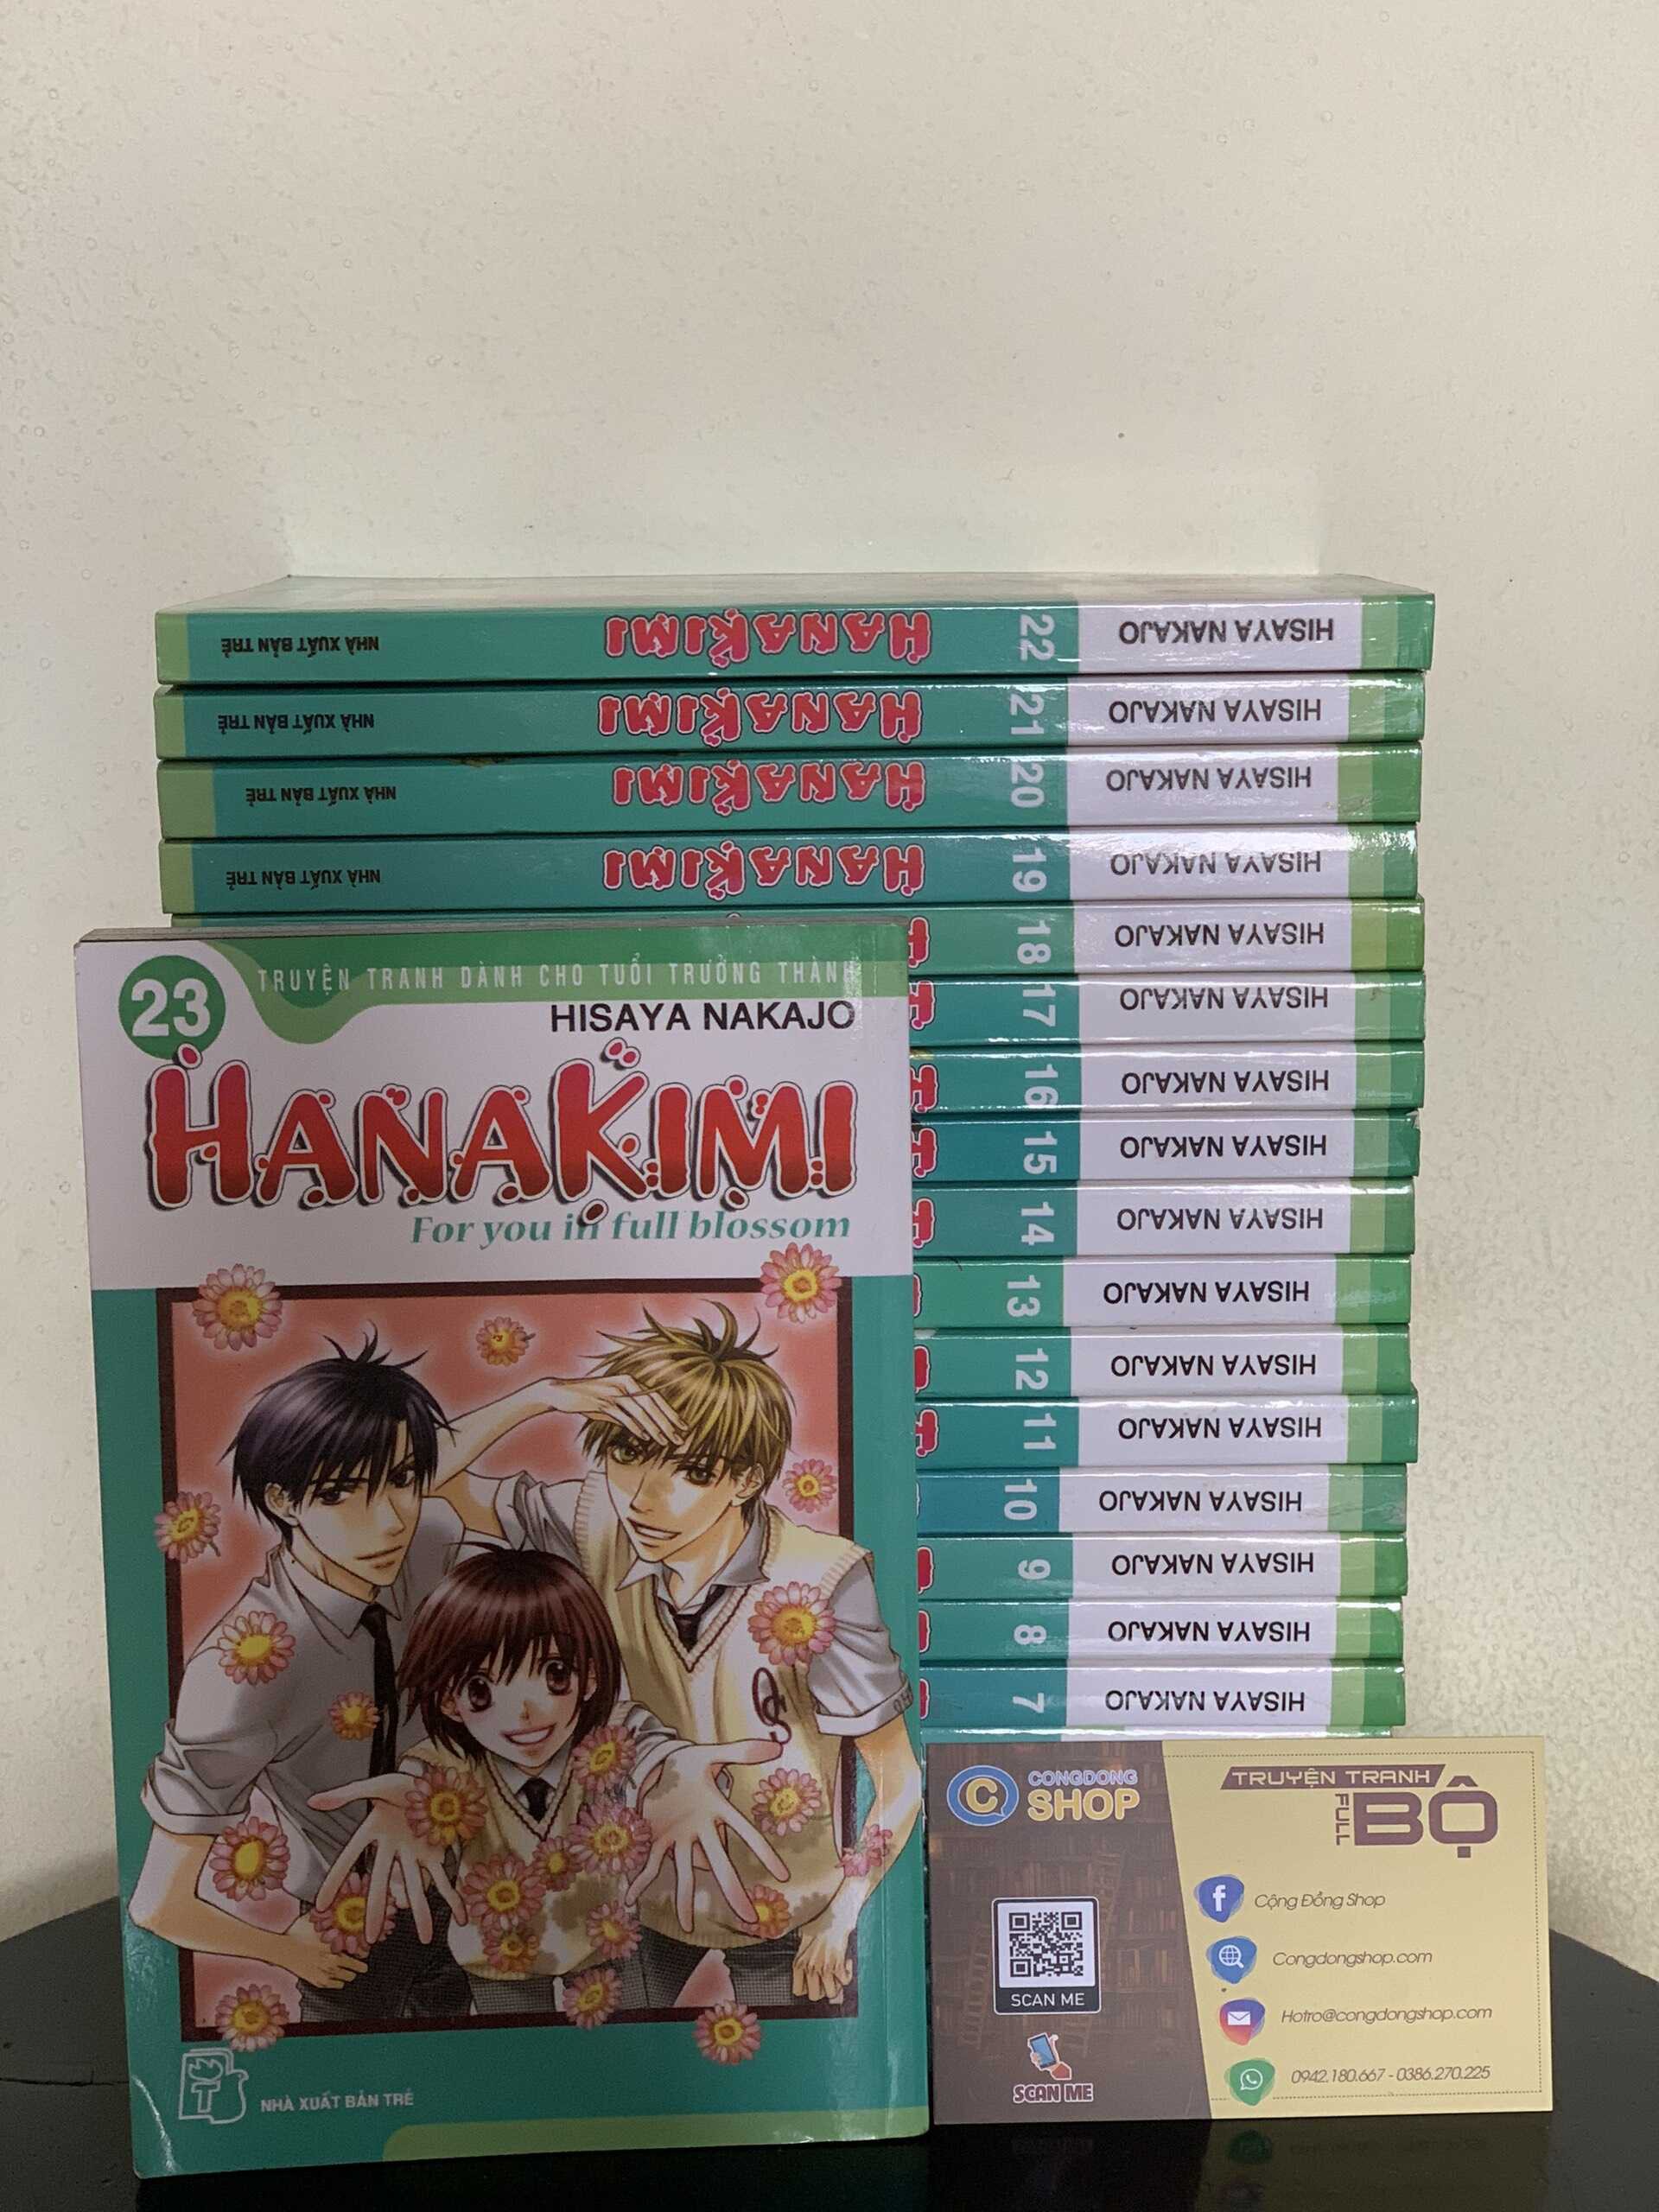 Mua Truyện Hanakimi Full Bộ Giá Rẻ